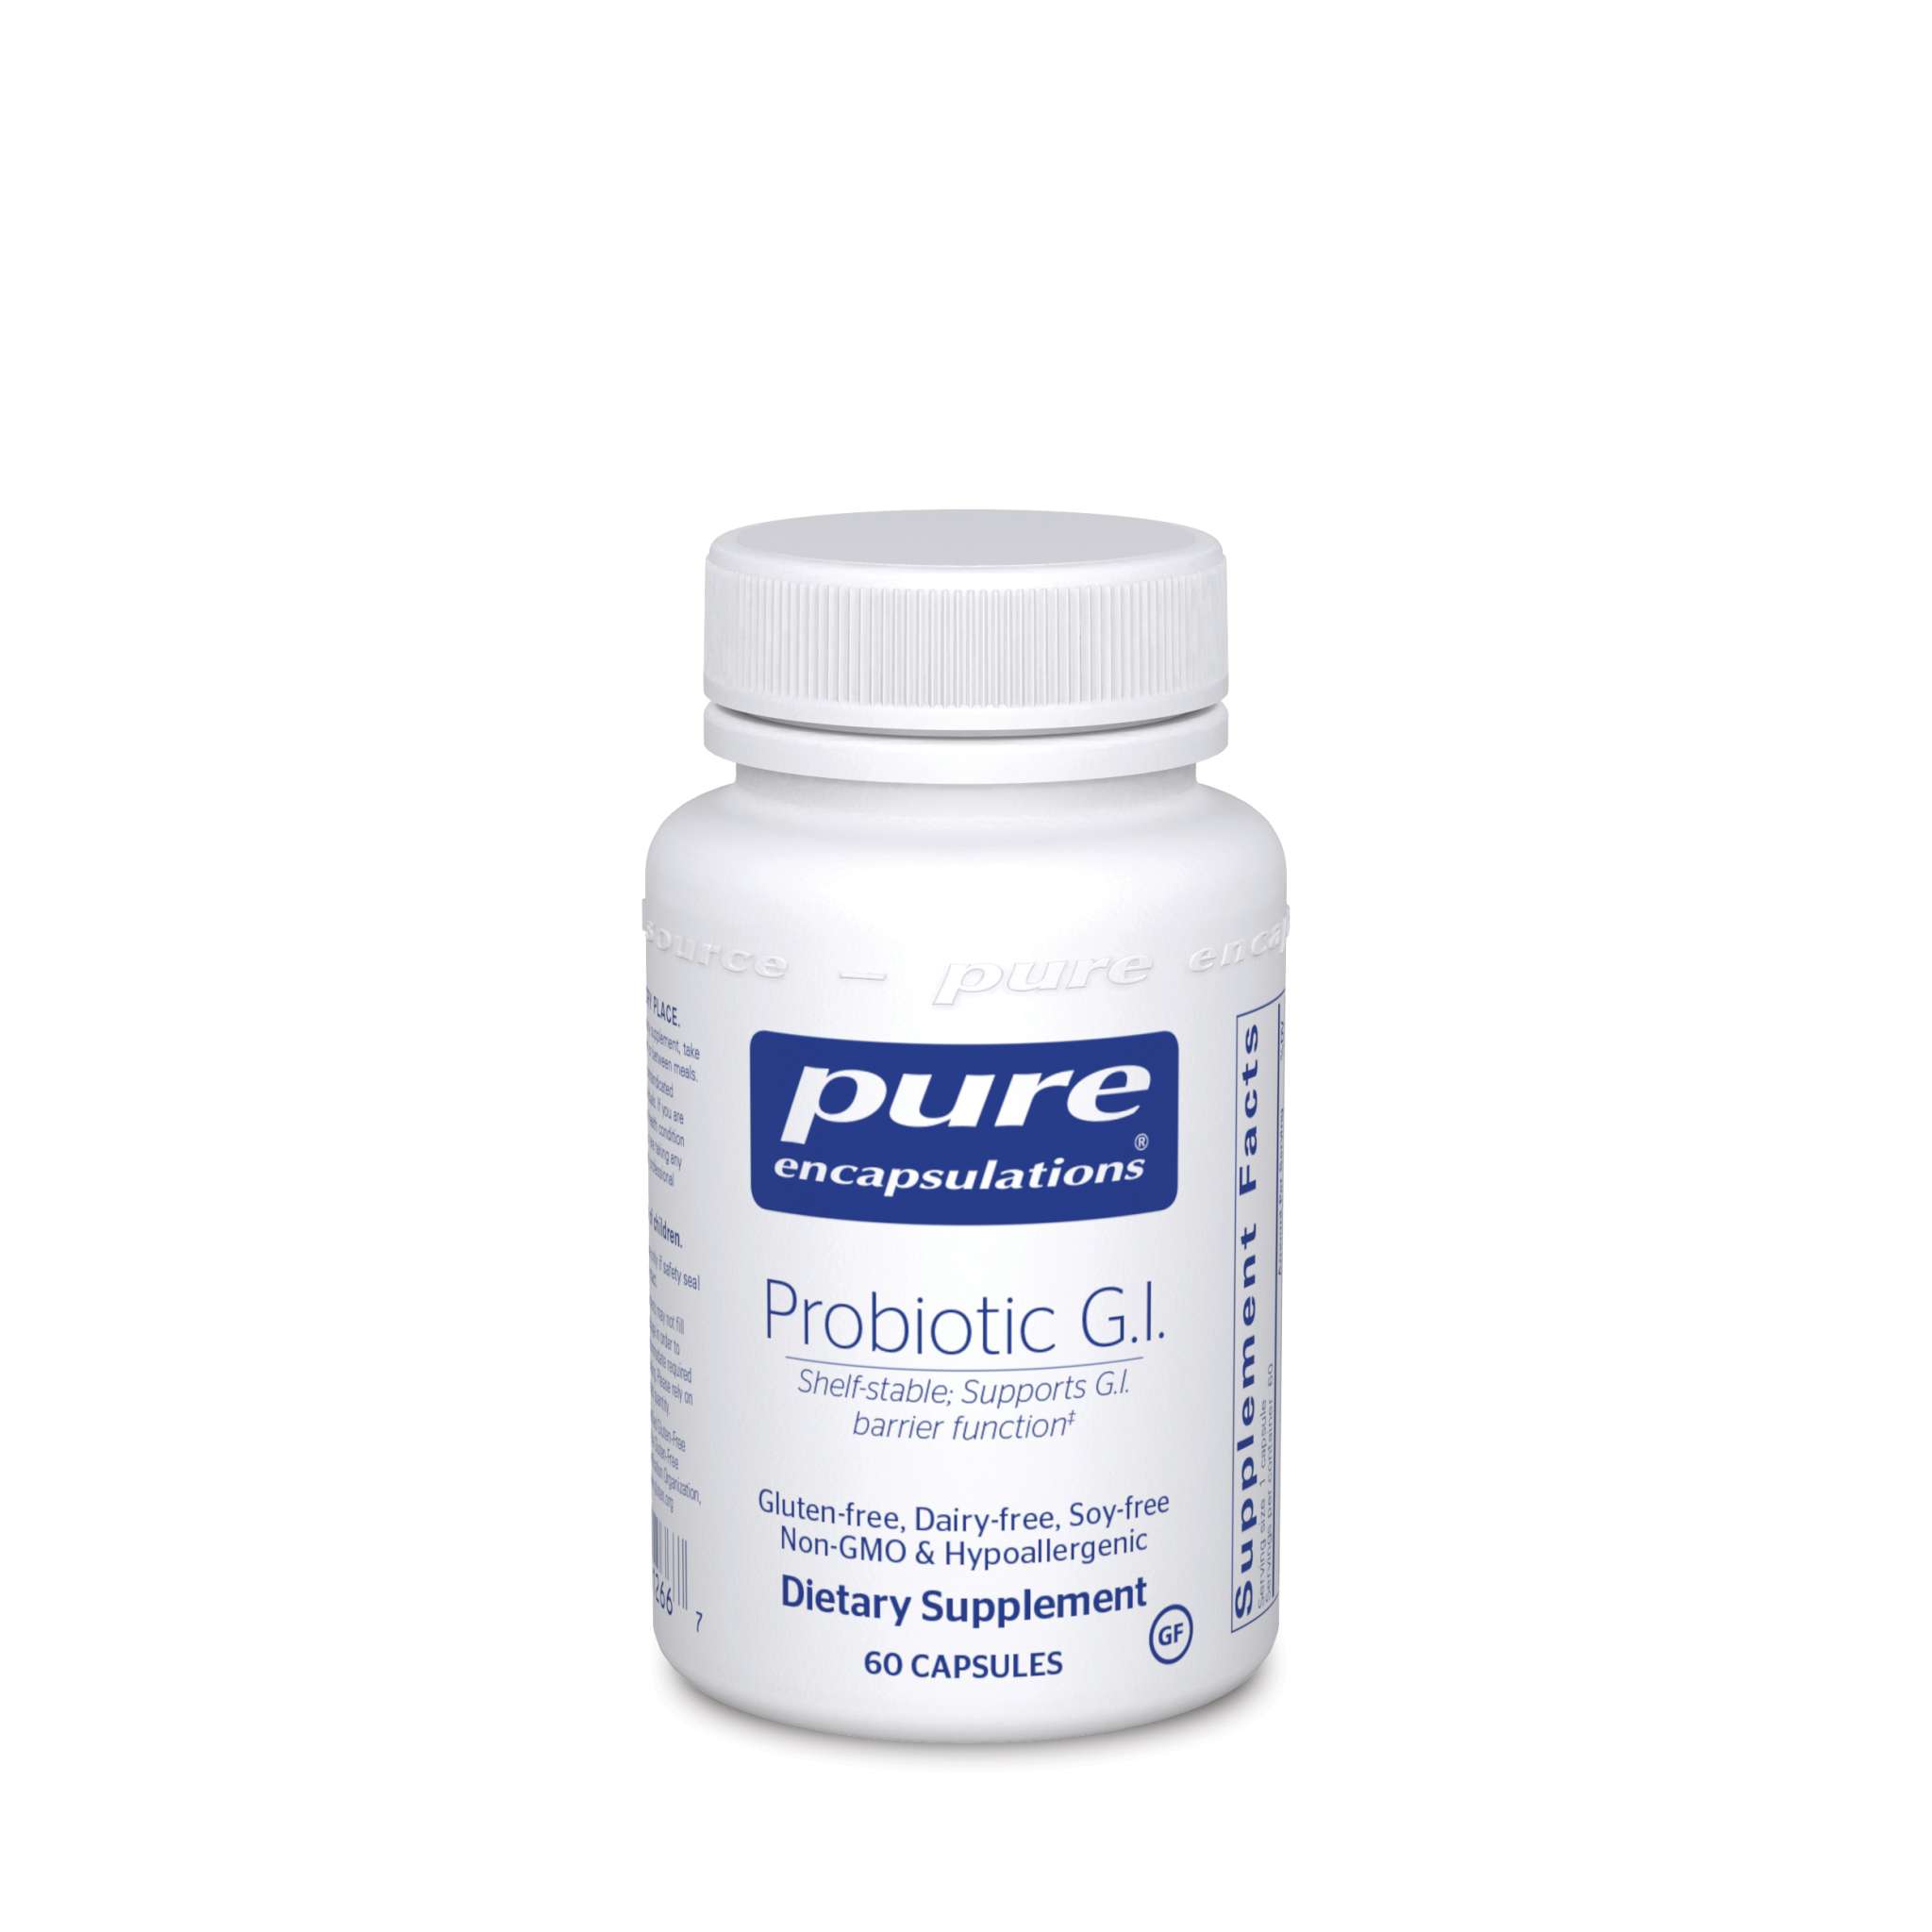 Pure Encapsulations - Probiotic G I